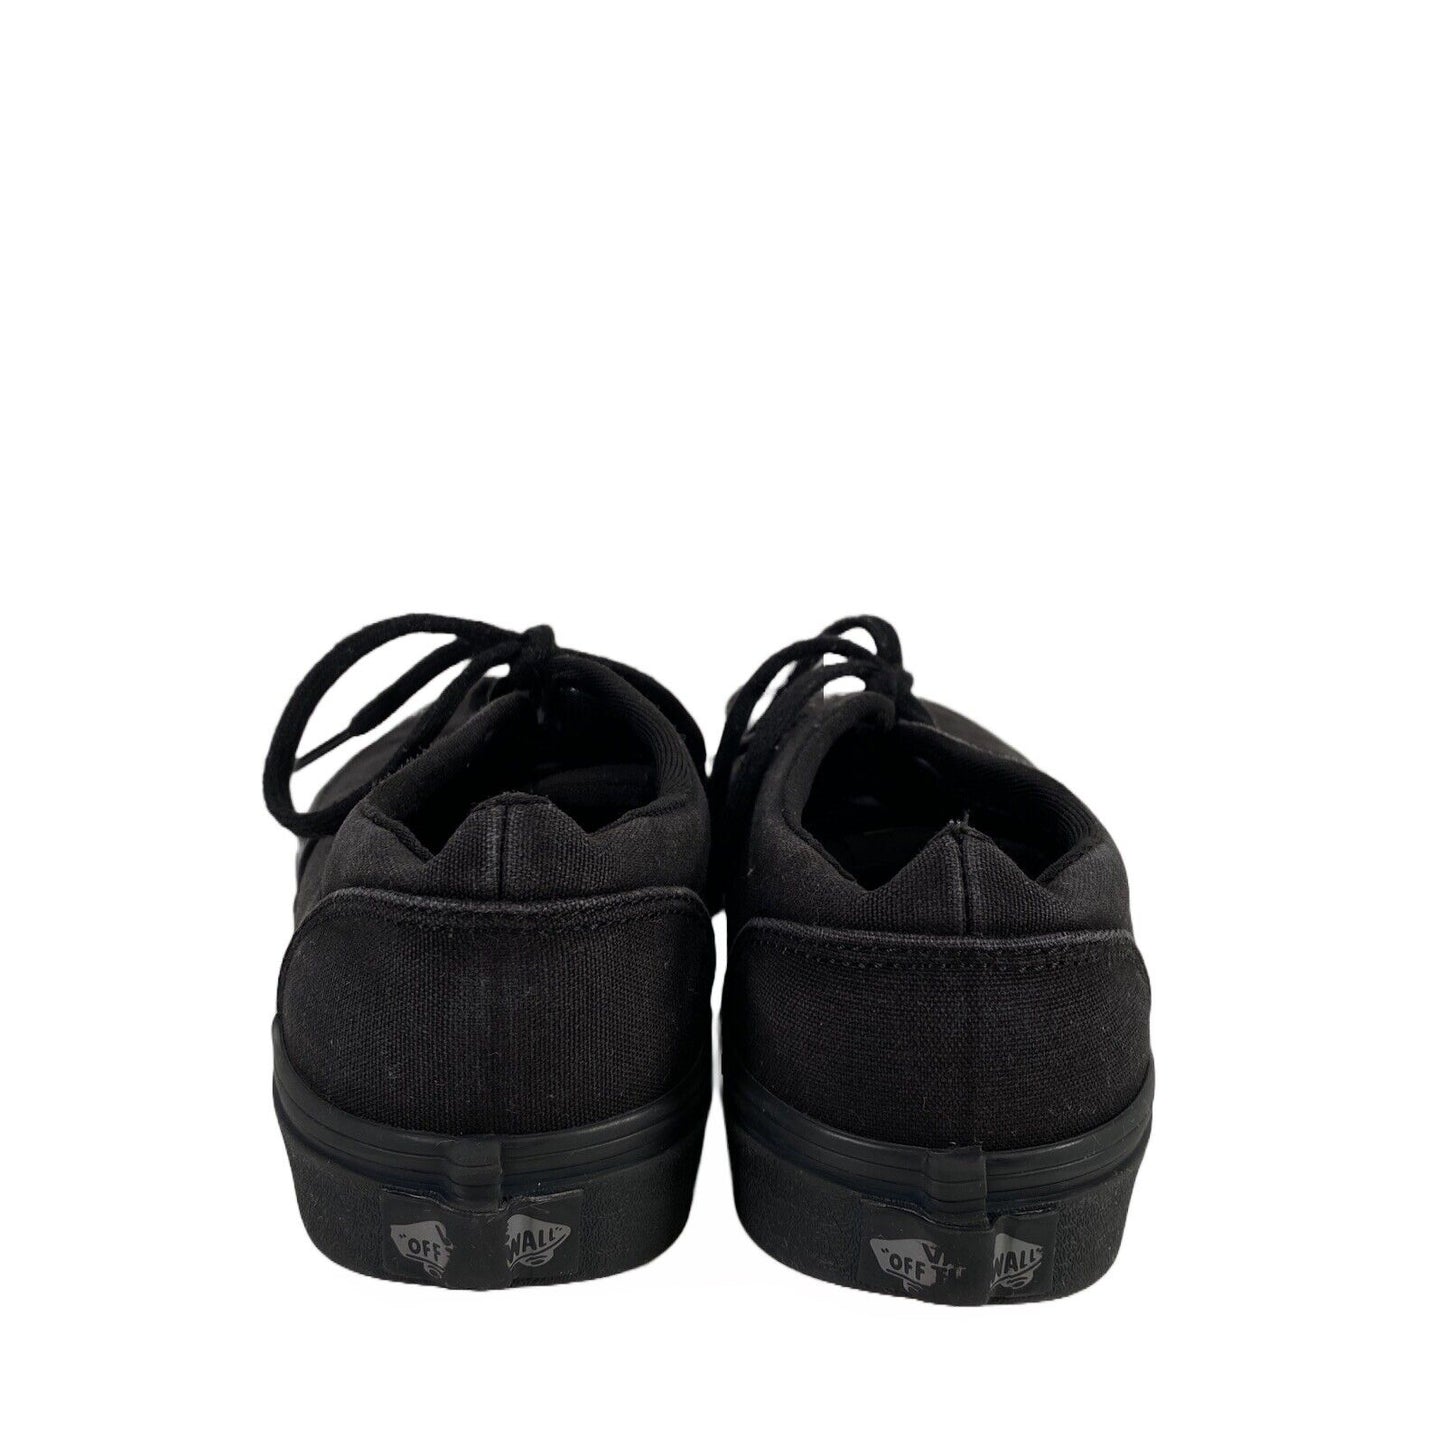 Vans Women's Black Canvas Lace Up Casual Sneakers - 6